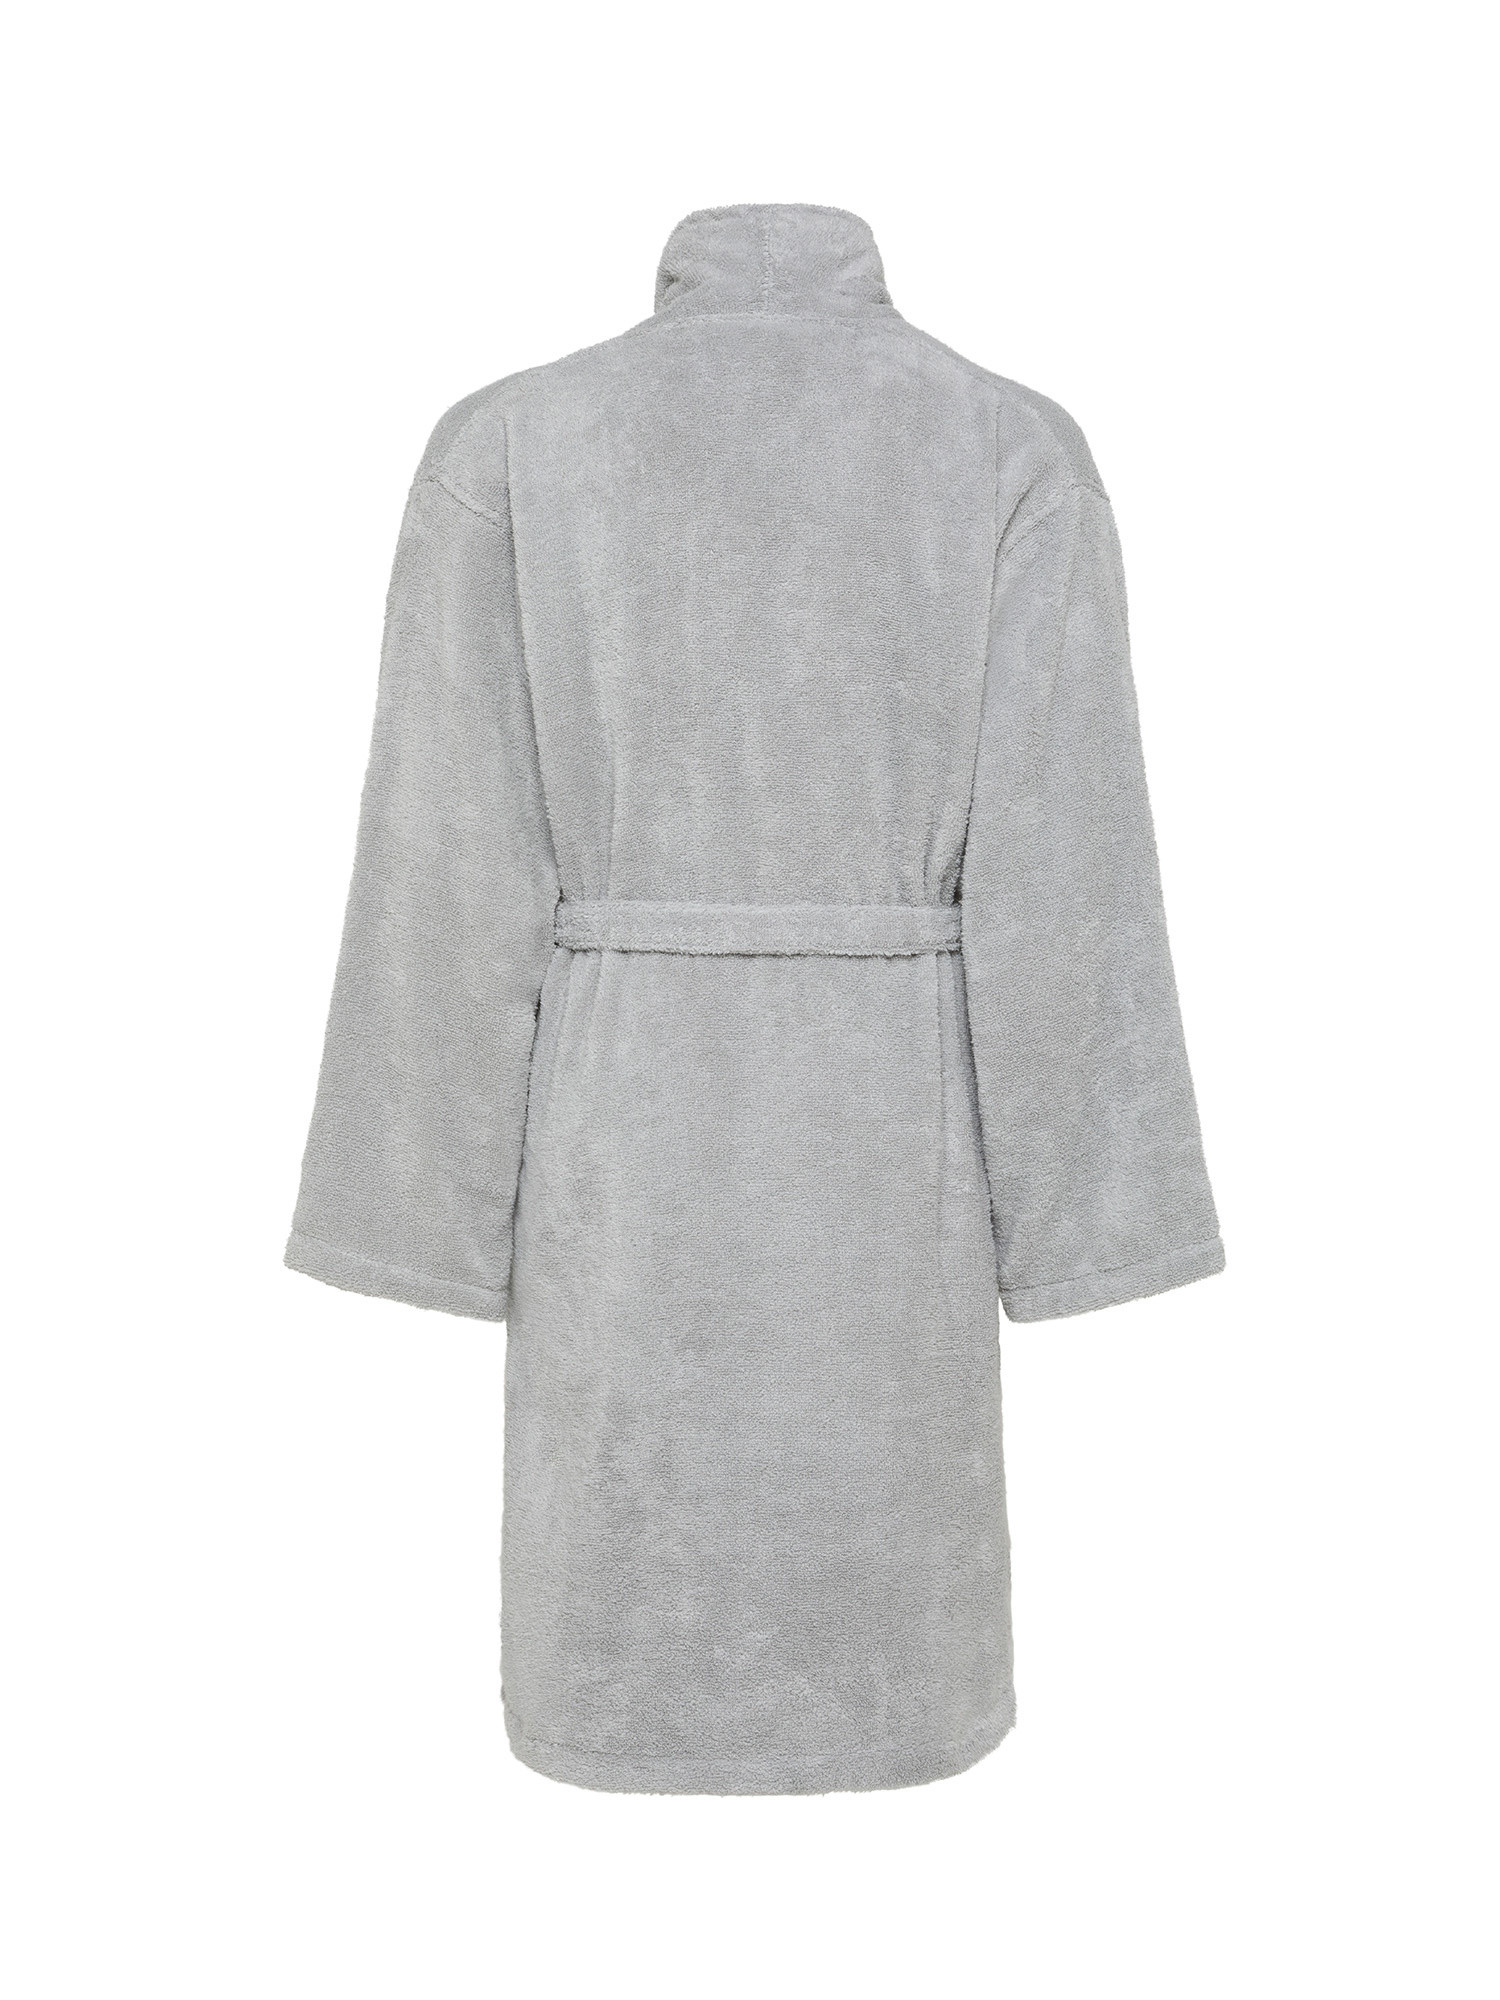 Cotton terry bathrobe, Grey, large image number 1